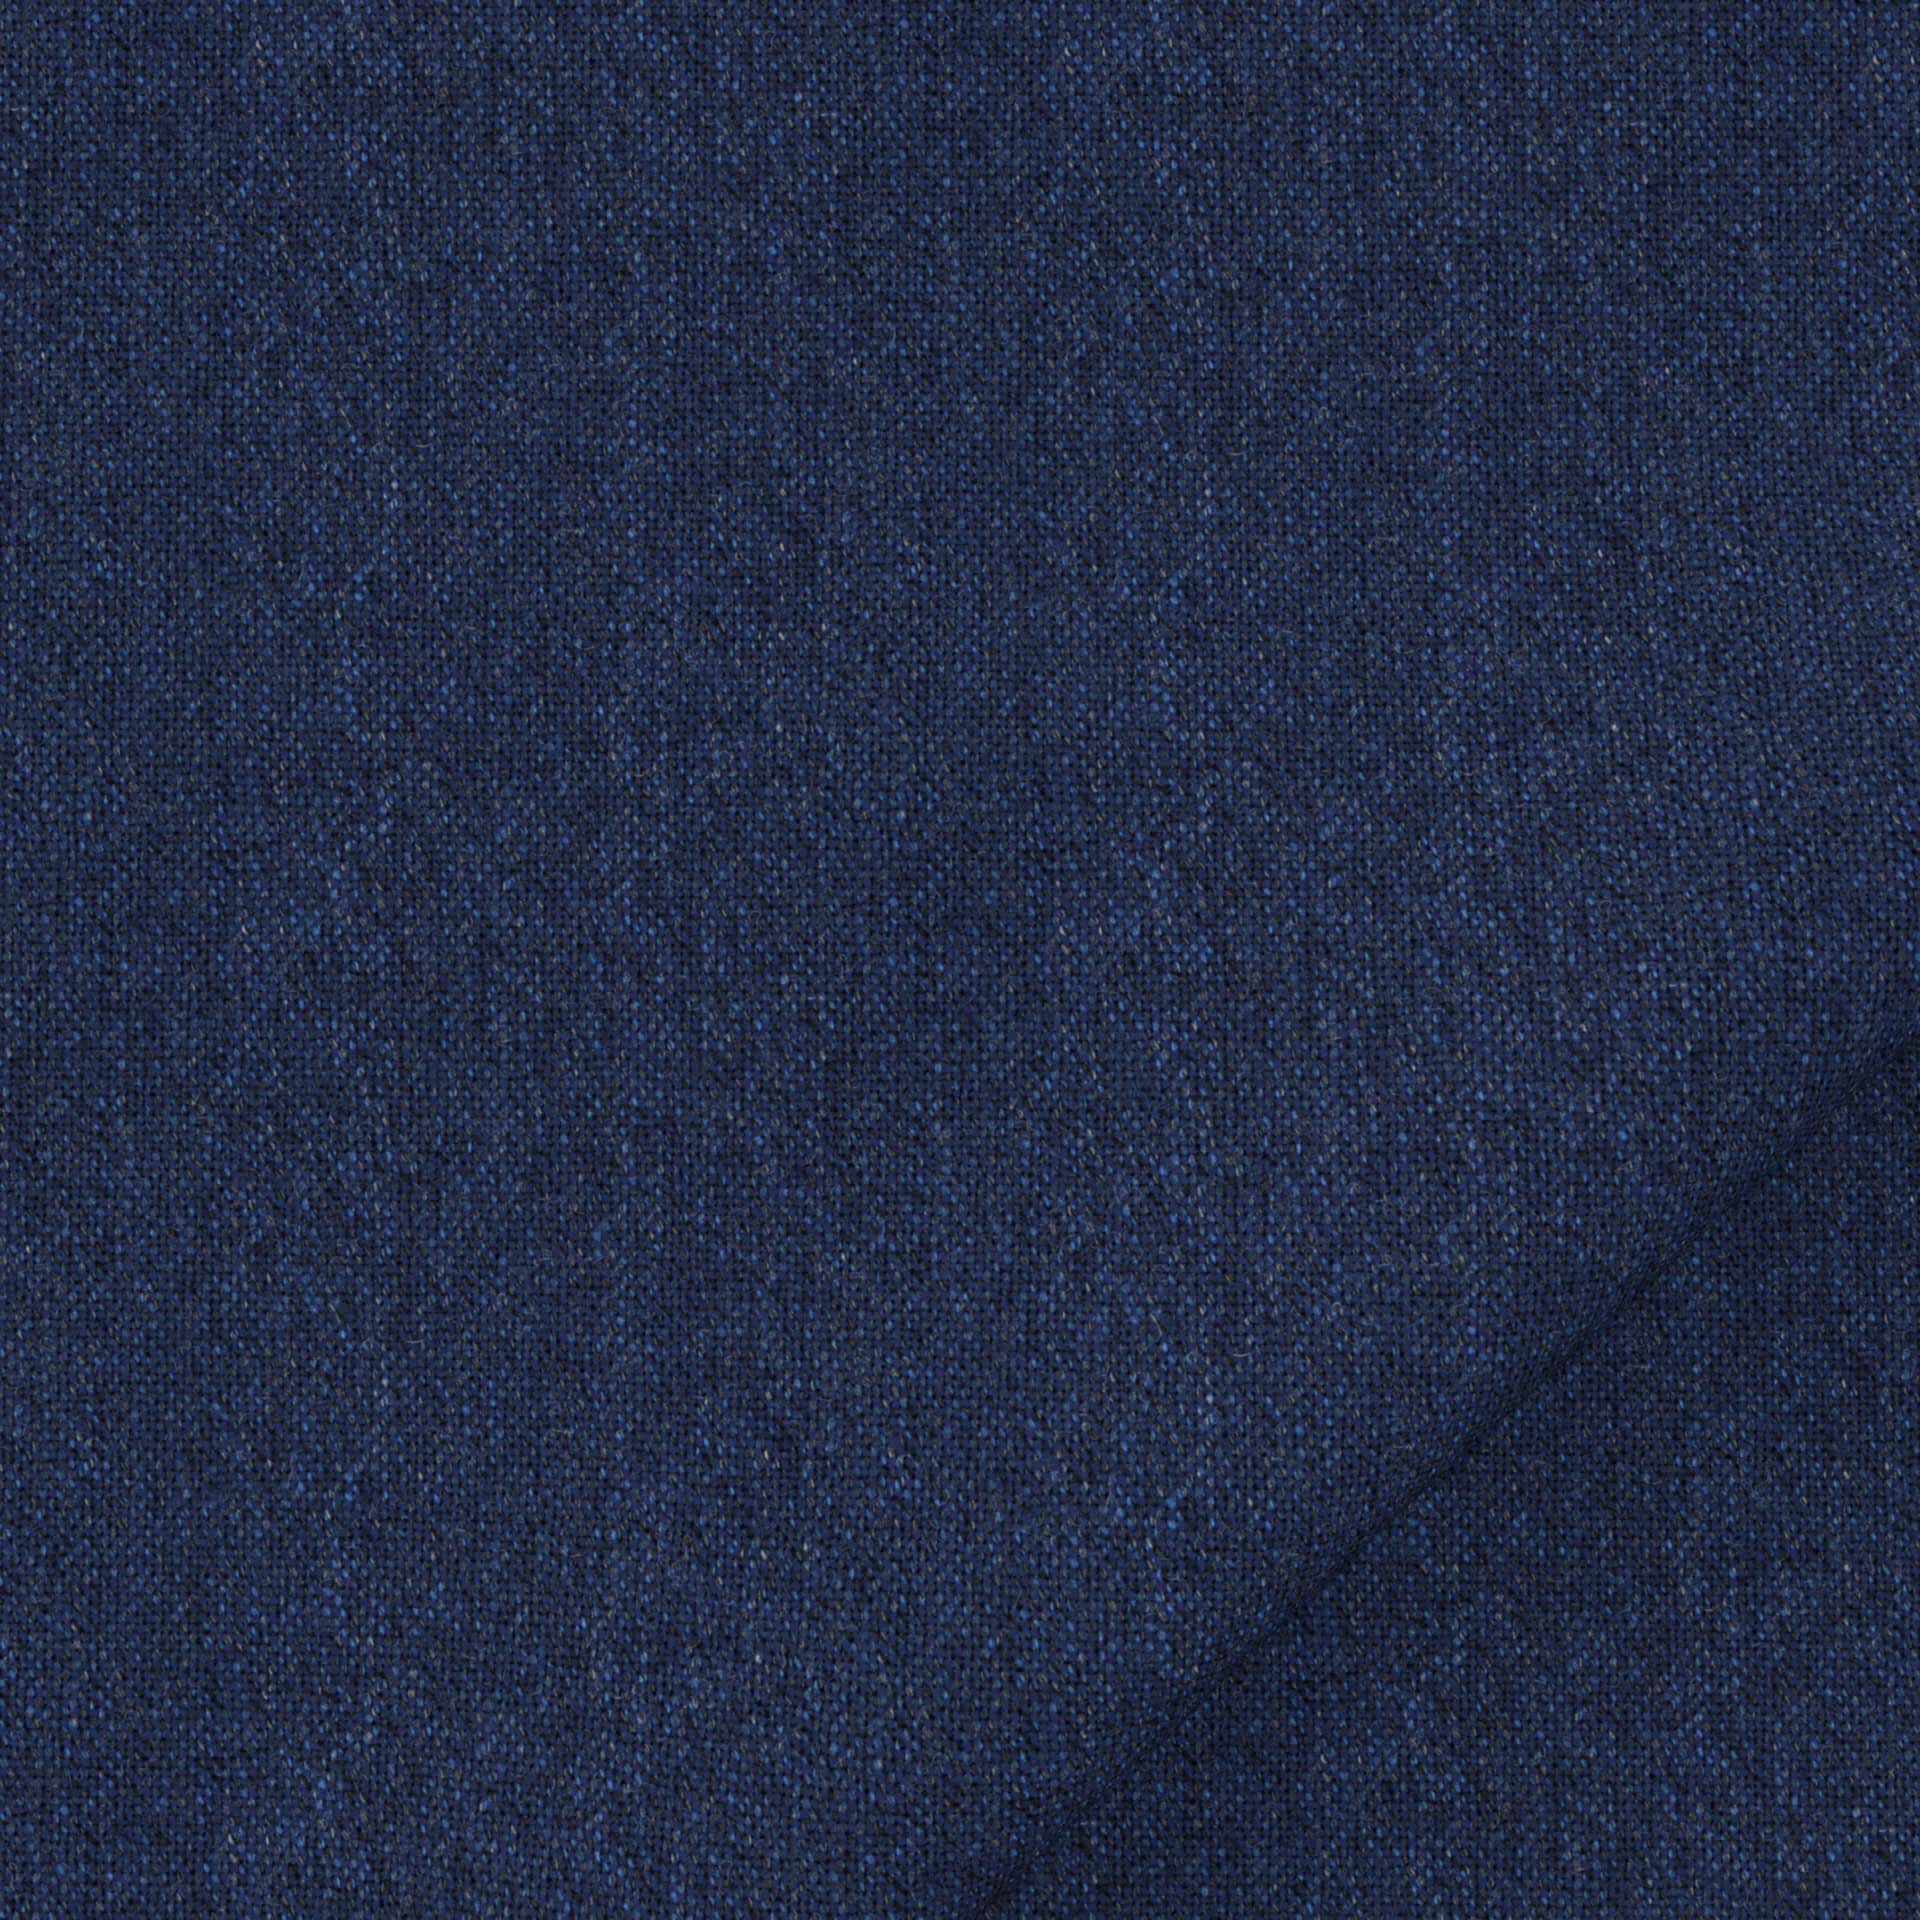 Custom made suit-tweed-blue-melange-Italian fabric-onceaday